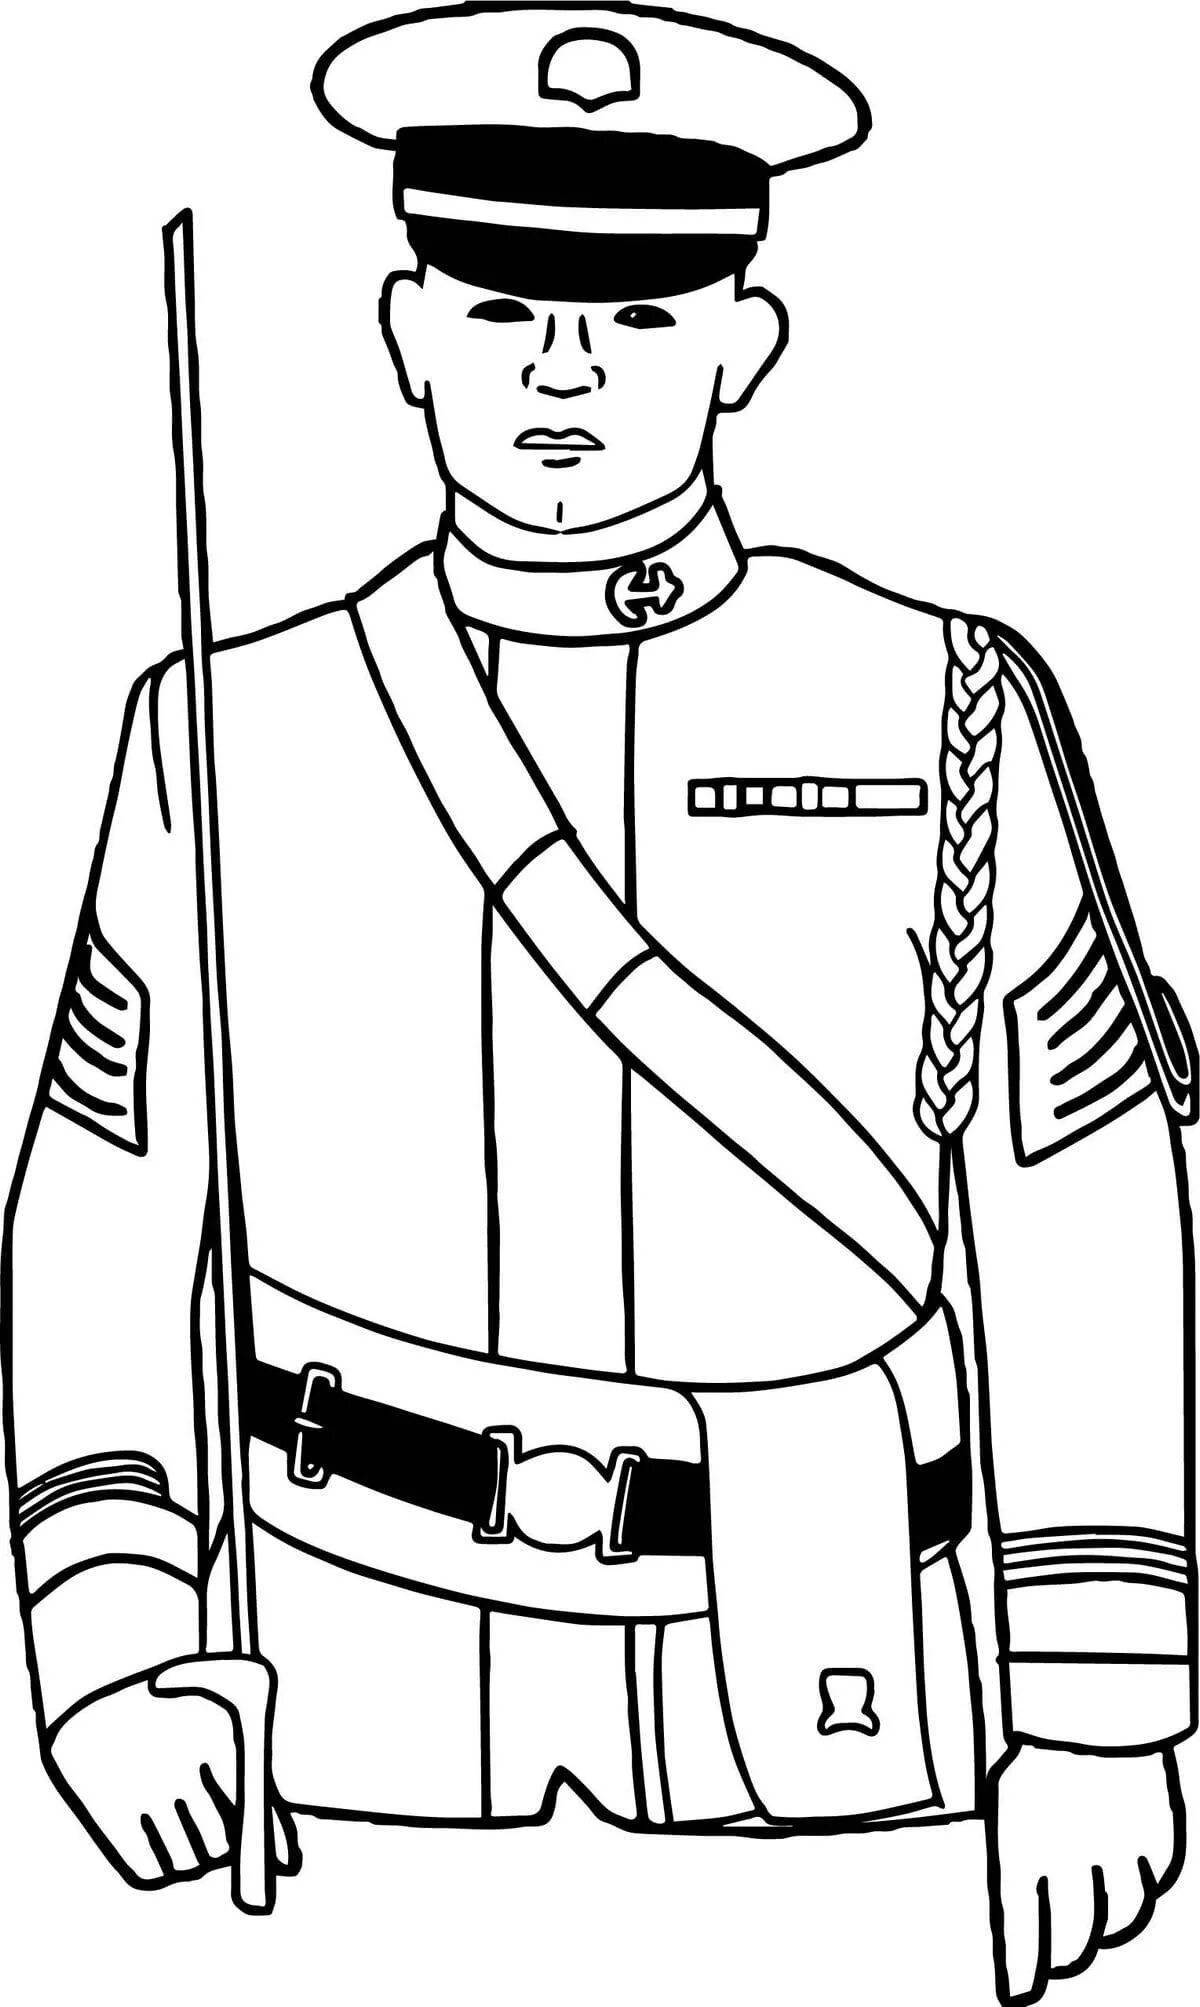 Bright military uniform coloring book